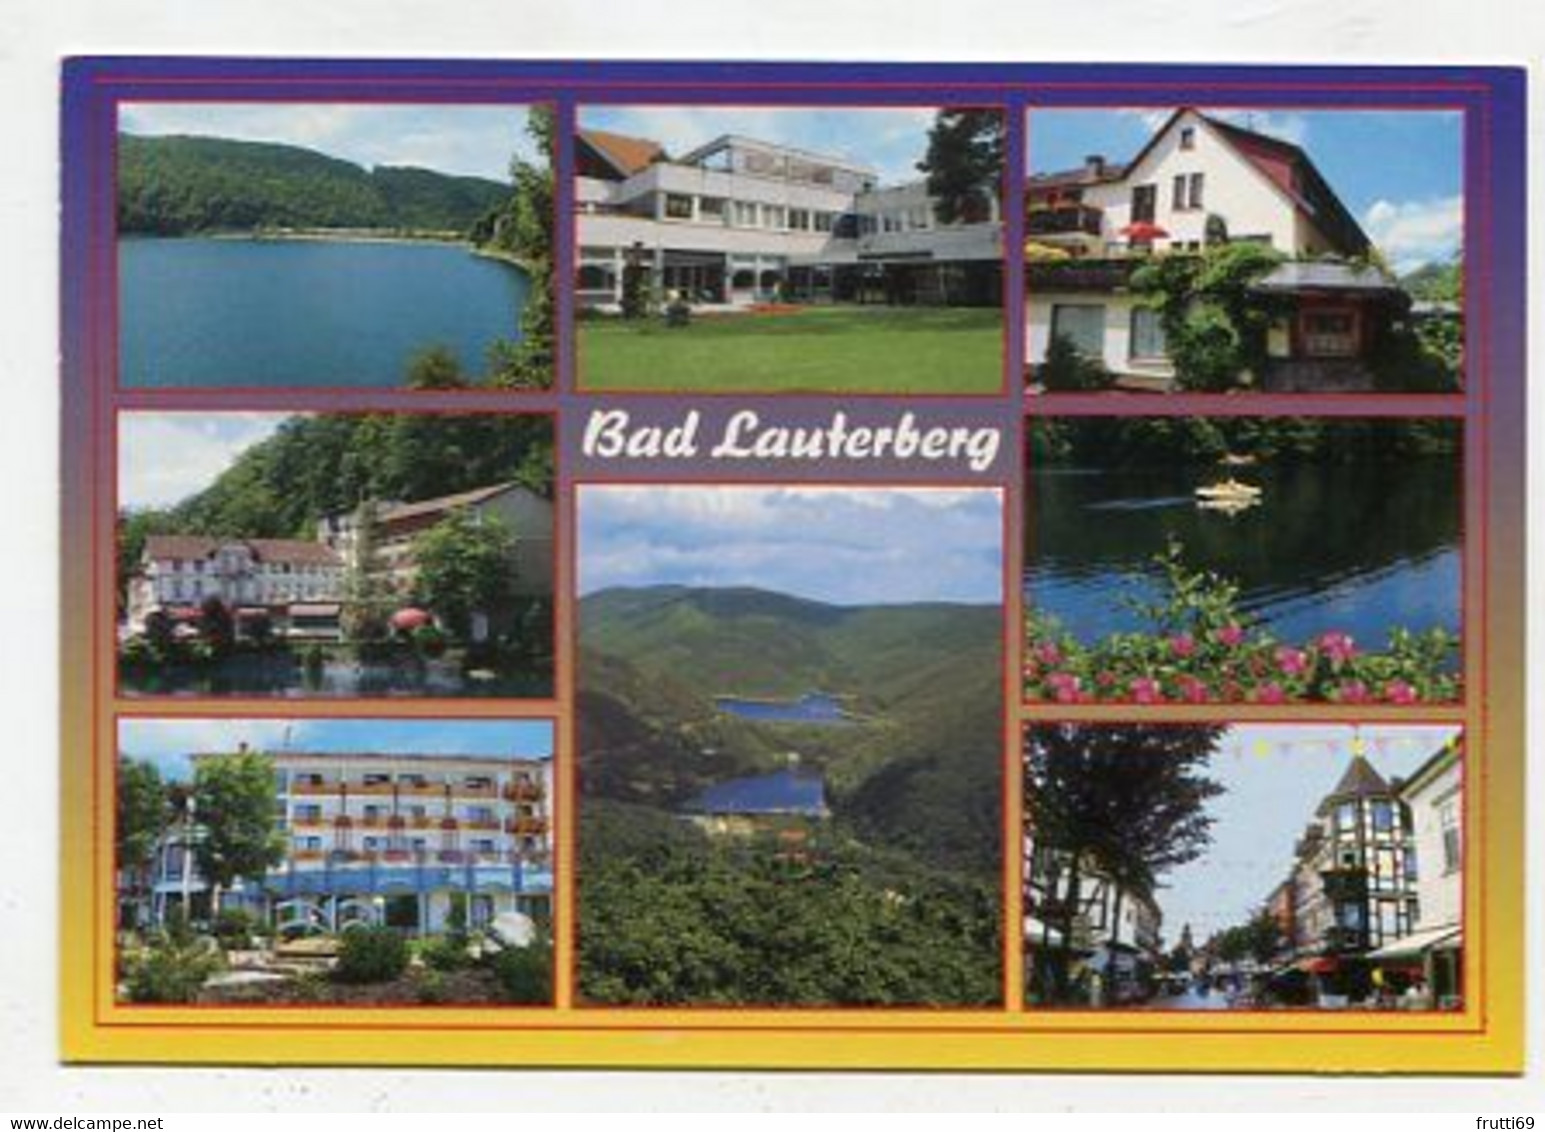 AK 026783 GERMANY - Bad Lauterberg - Bad Lauterberg